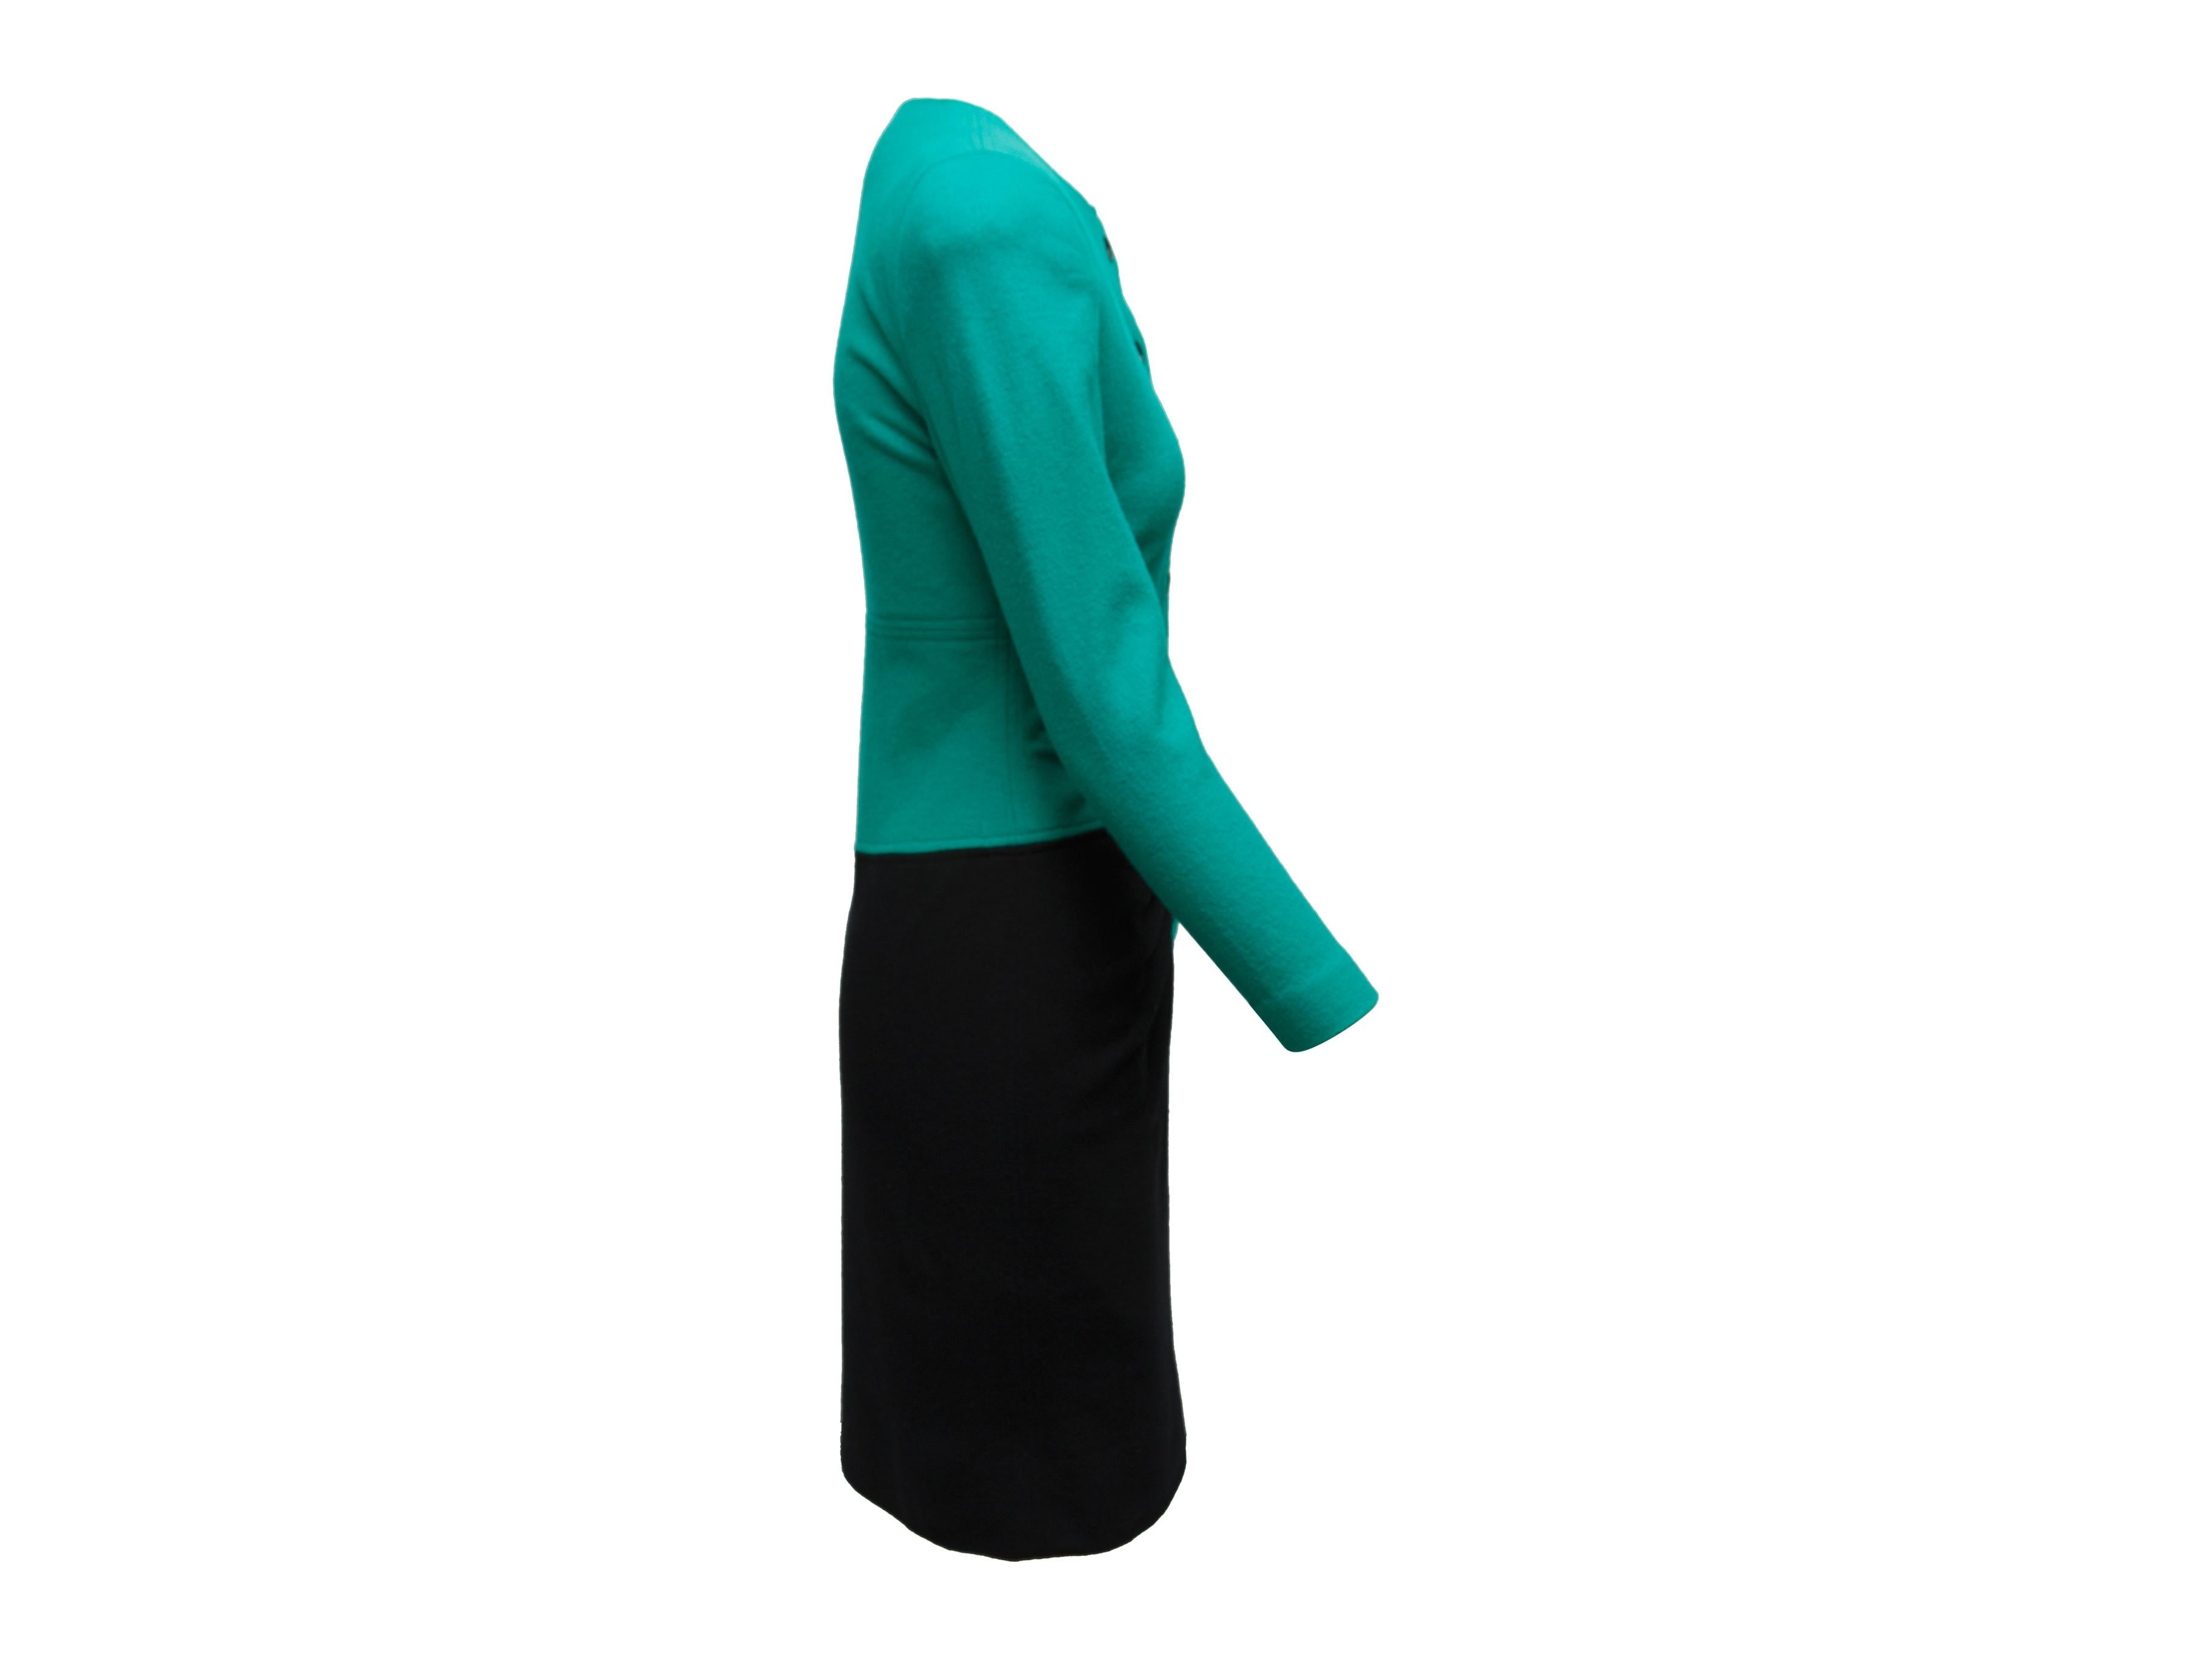 Product details: Vintage green and black color block dress by Oscar de la Renta. Circa 1980s. Crew neck. Long sleeves. Button closures at front. 32